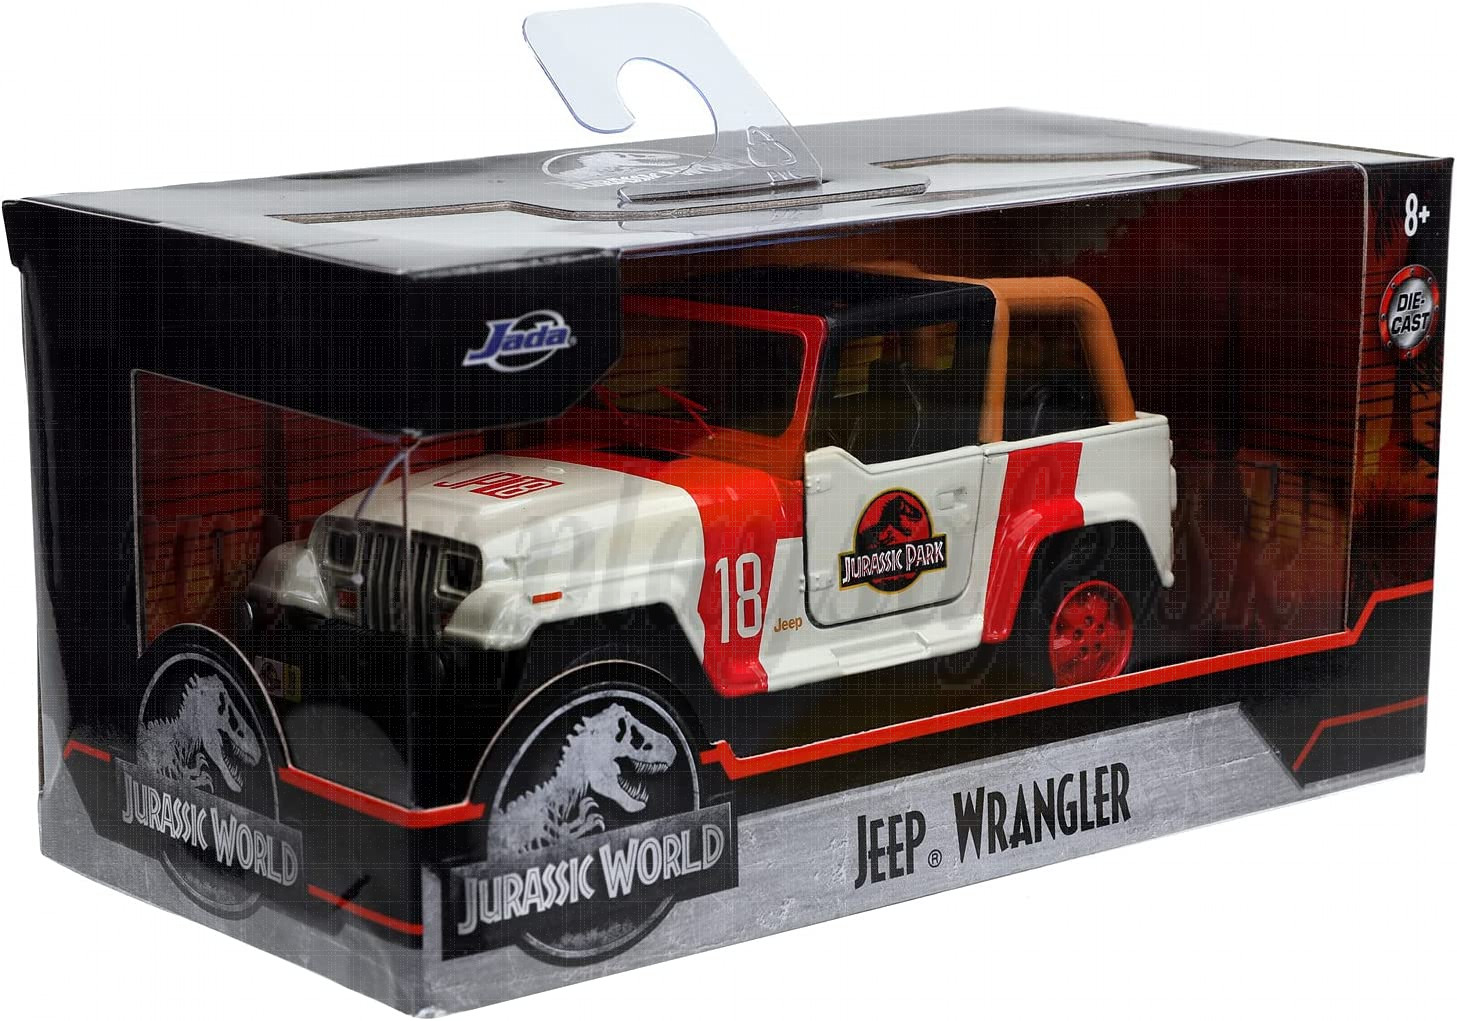 Jada Jurassic Park Jeep Wrangler Model Car Toy 1:32 